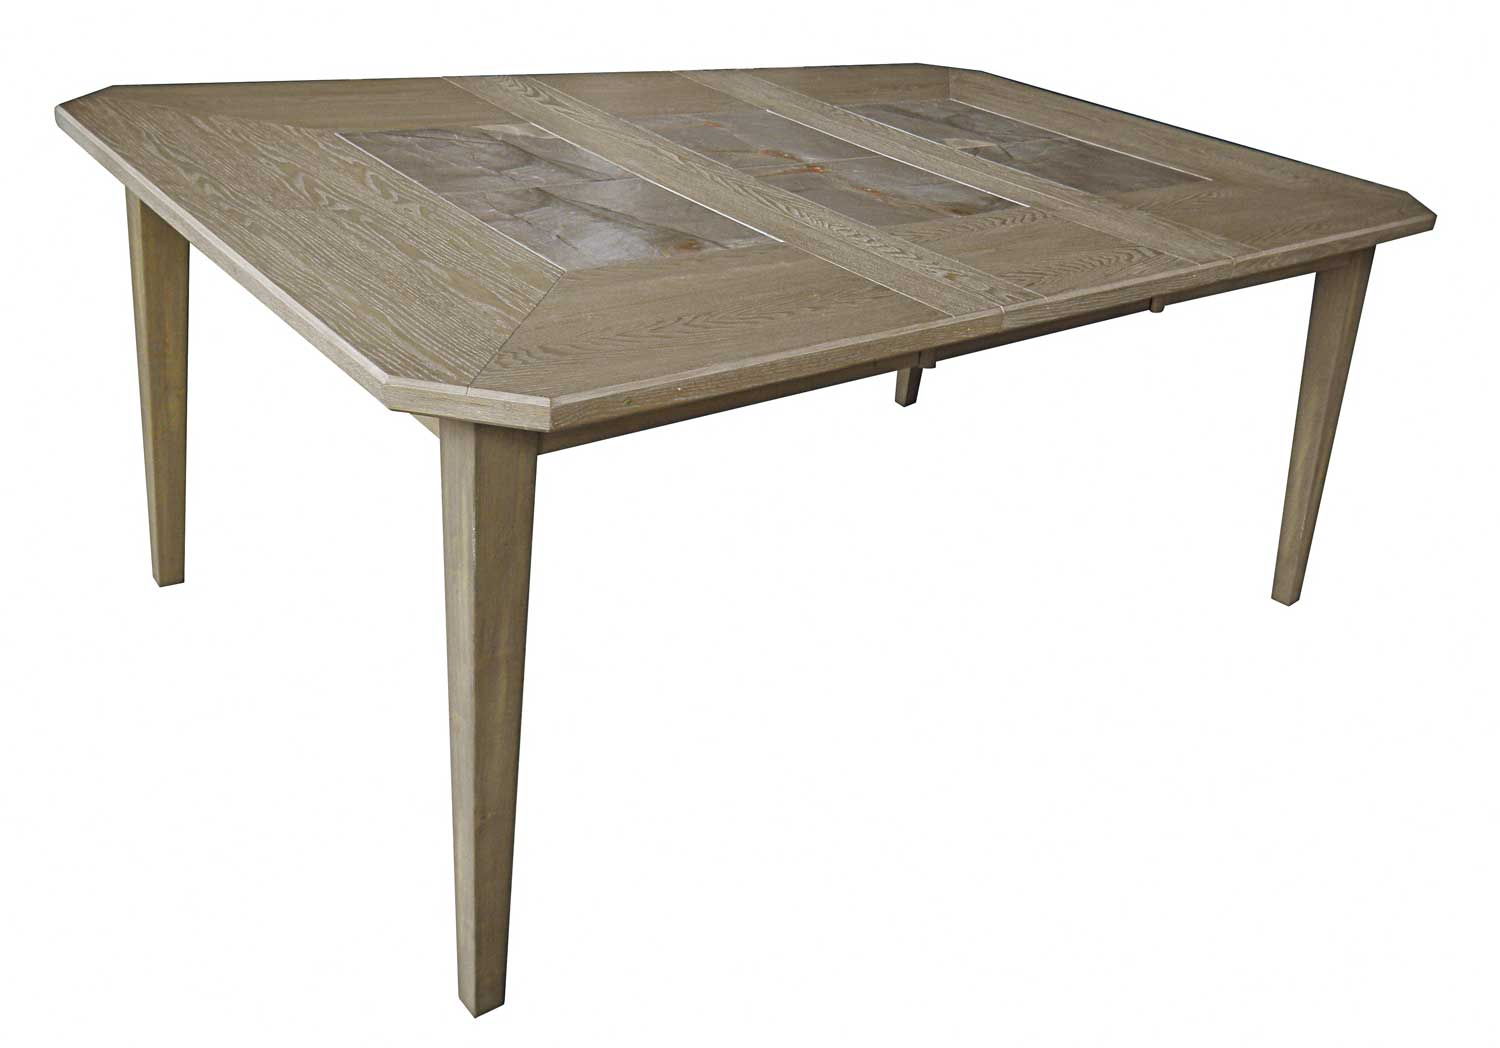 Homelegance Geranium Leg Dining Table With Leaf - Driftwood